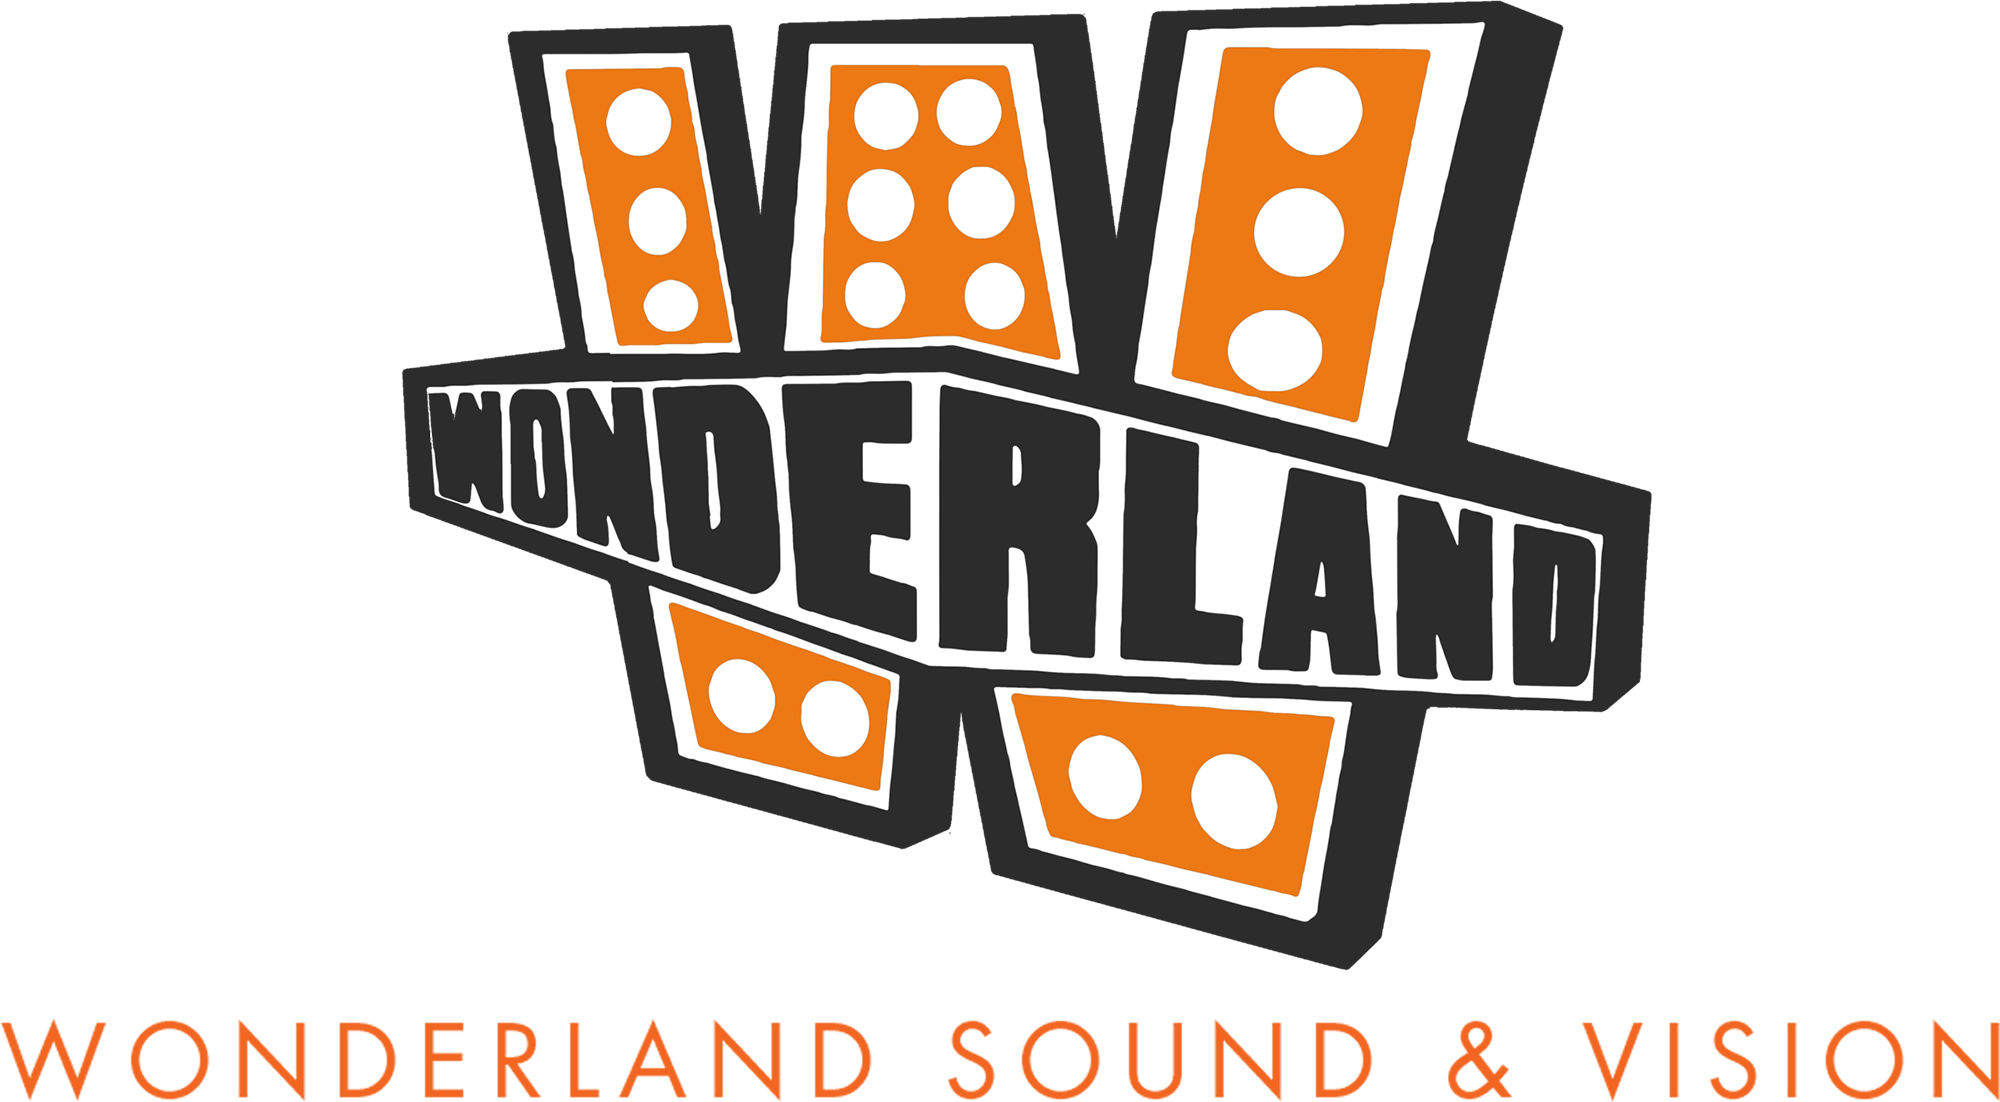 Wonderland Sound and Vision - company